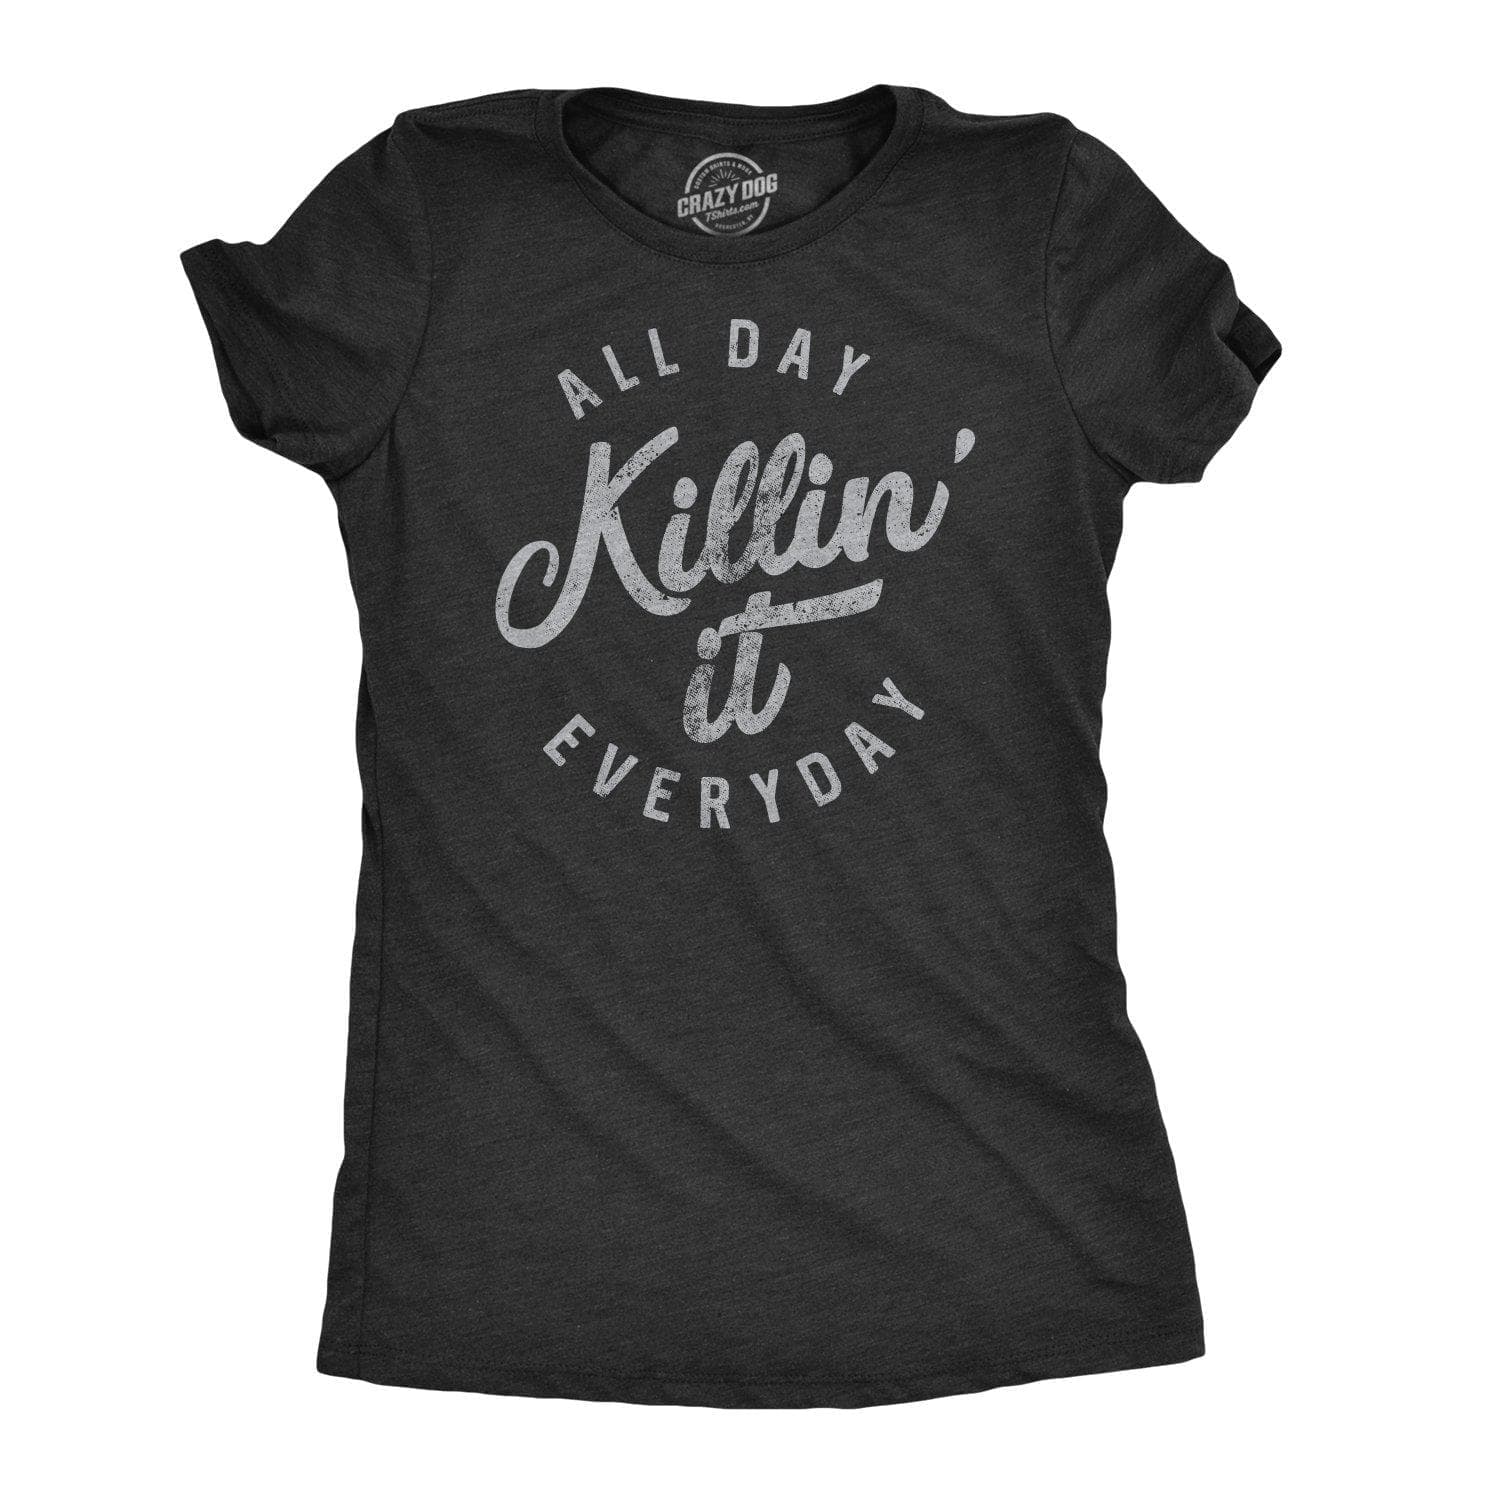 All Day Killin' It Everyday Women's Tshirt - Crazy Dog T-Shirts